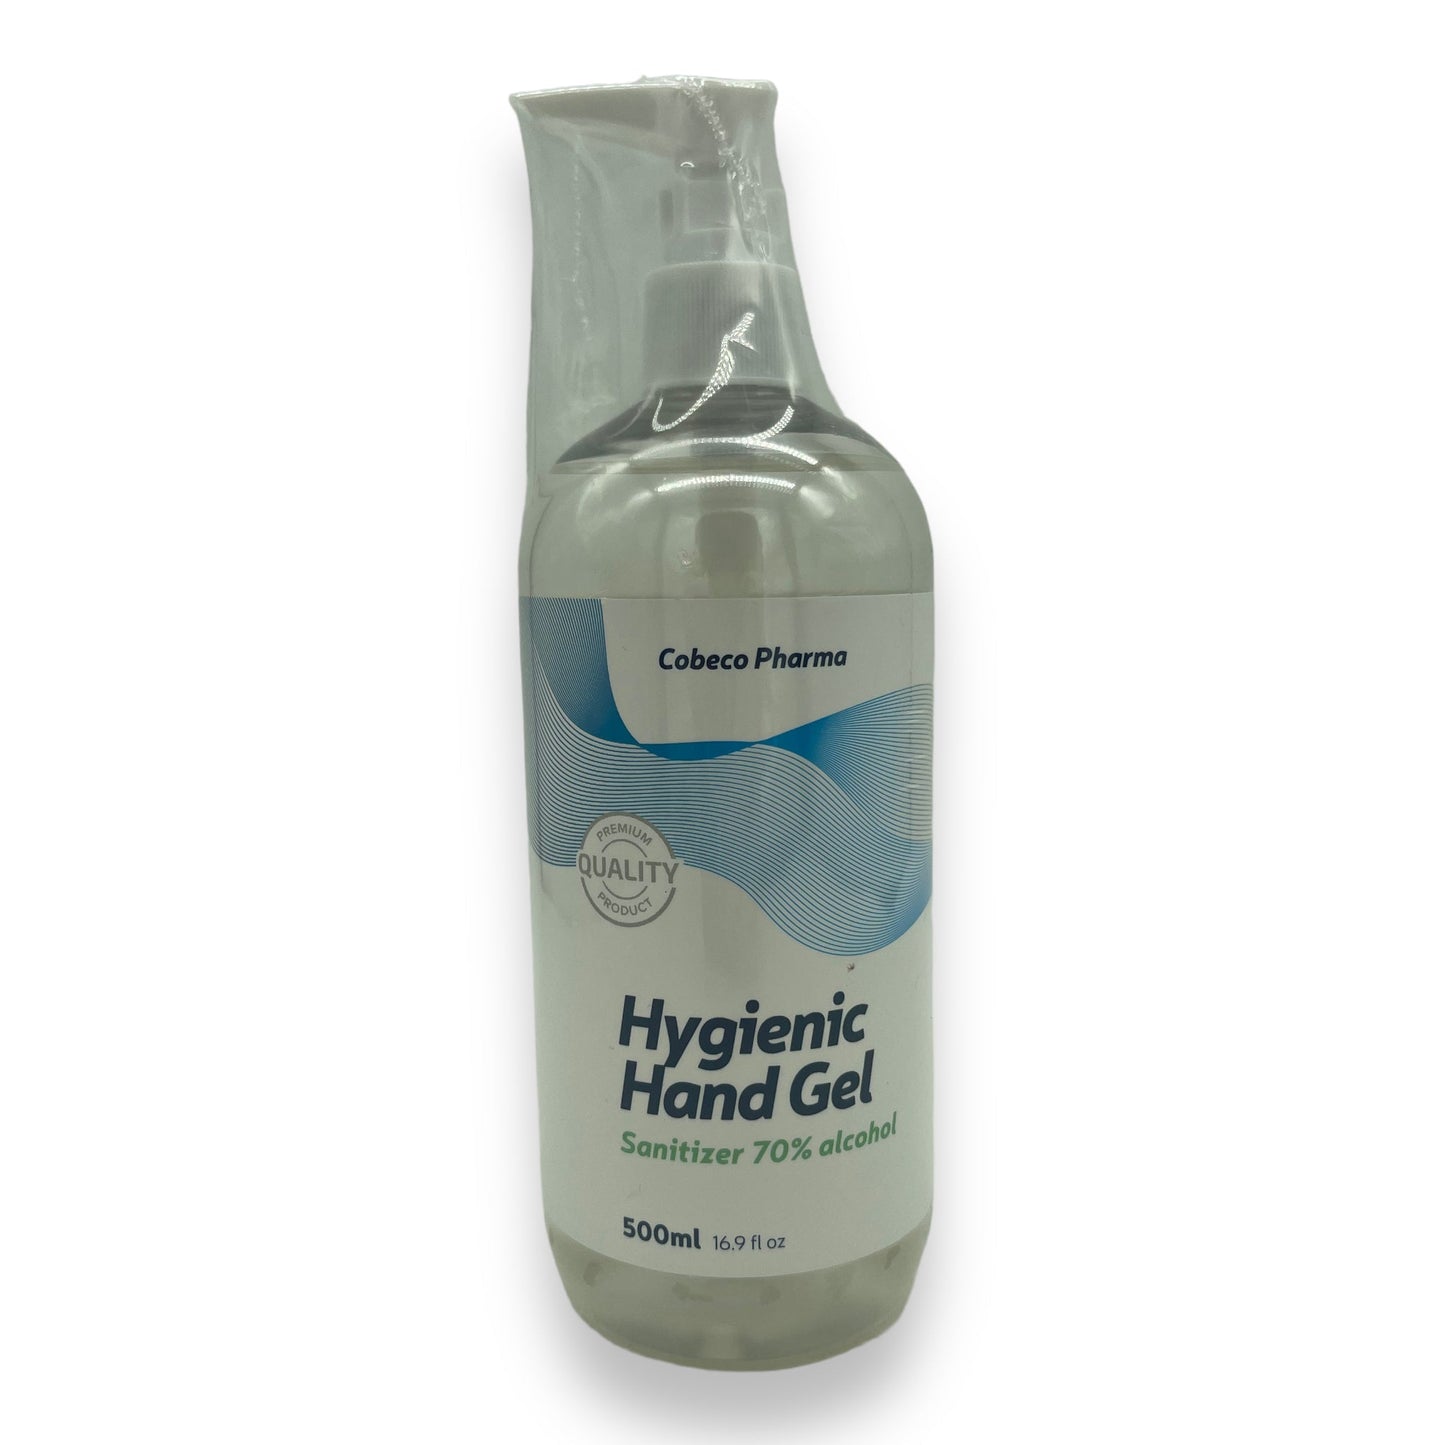 Cobeco Hygienic Hand Gel 500 Ml  - 70 % Alcohol